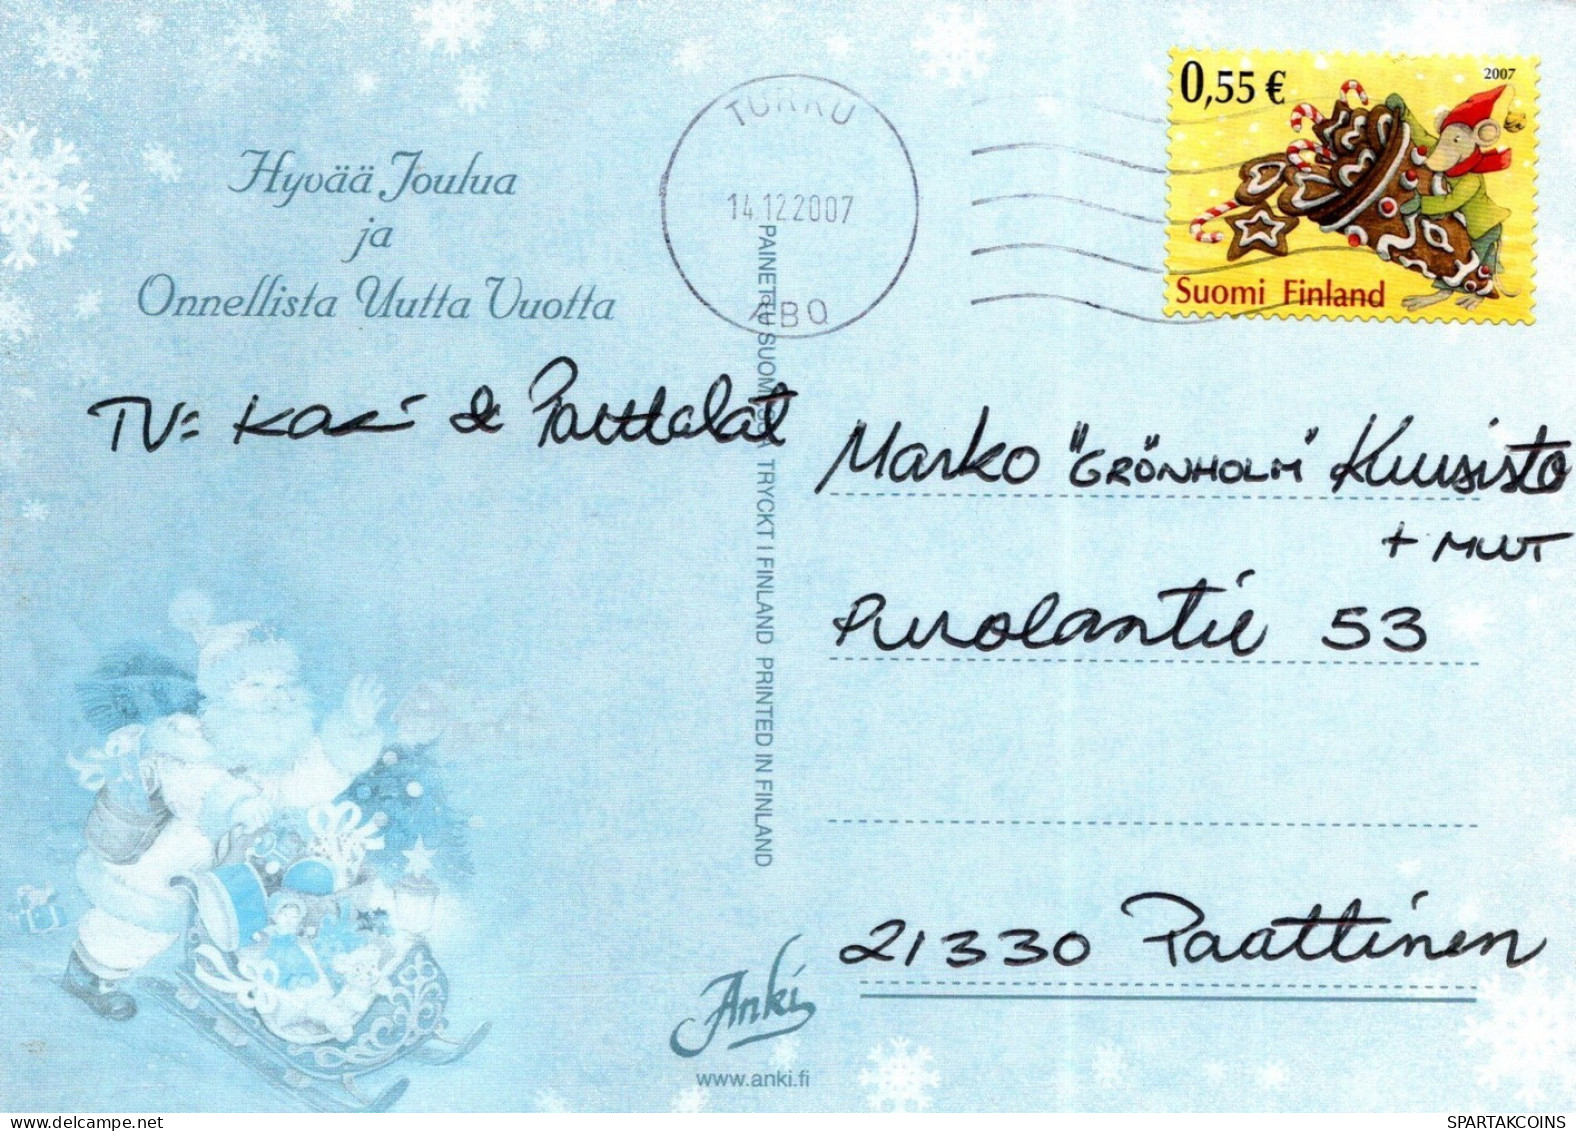 SANTA CLAUS CHRISTMAS Holidays Vintage Postcard CPSM #PAJ525.GB - Santa Claus